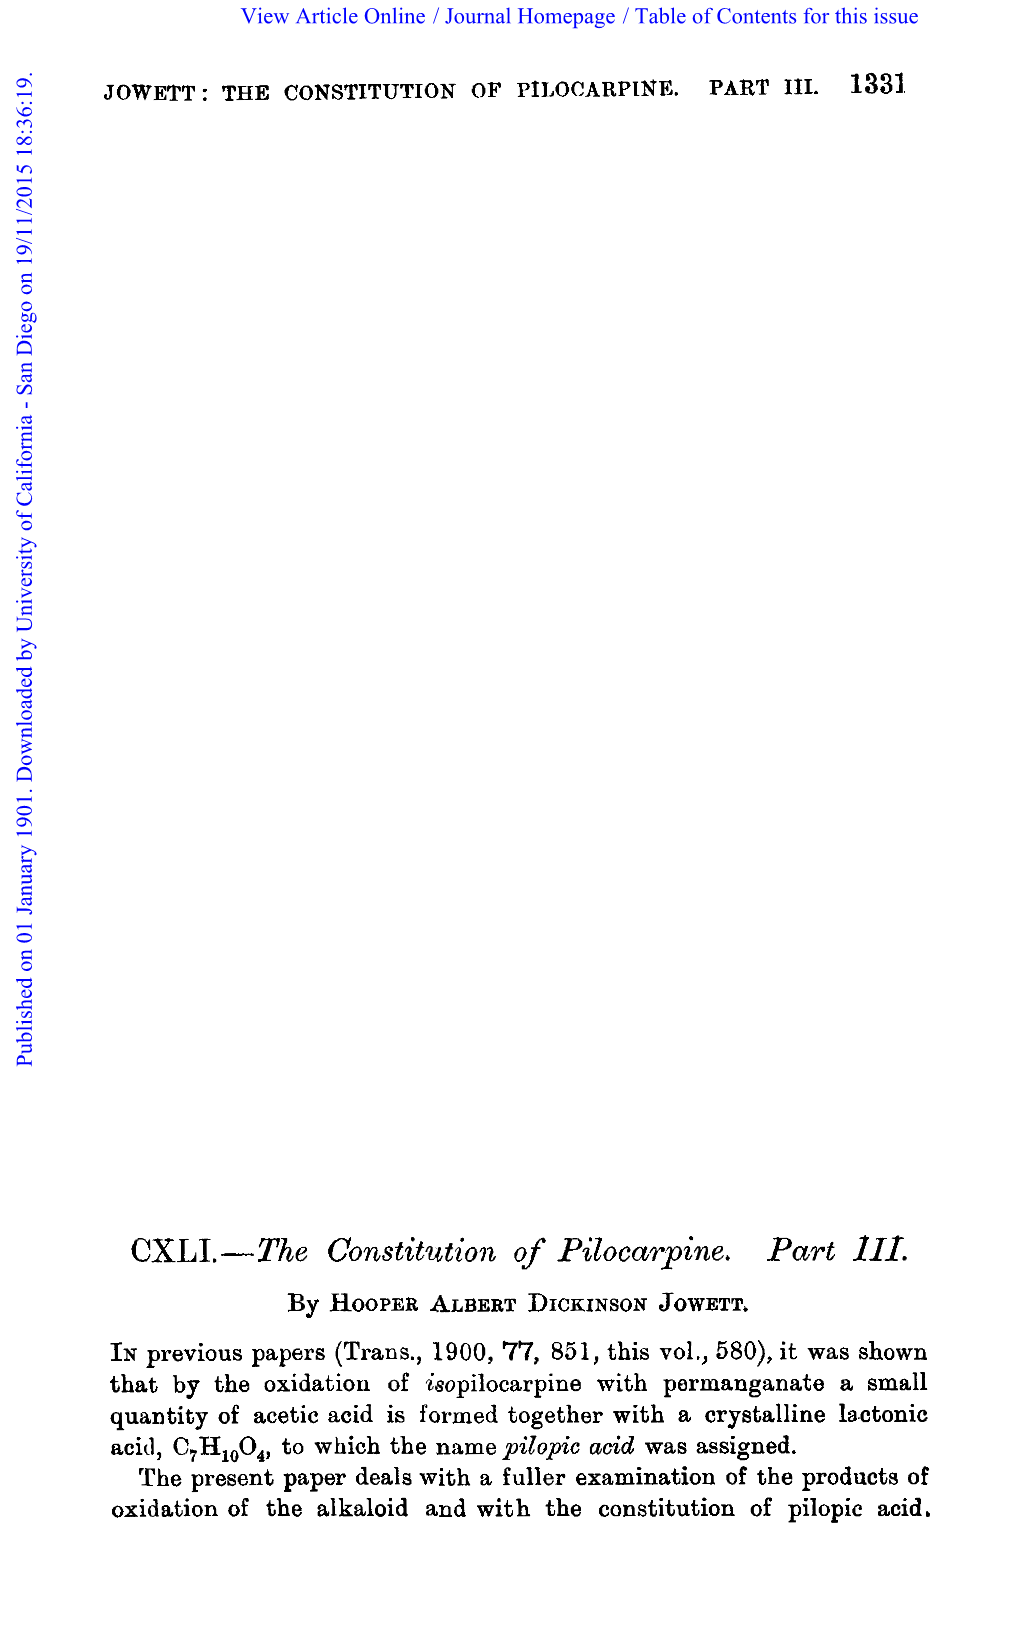 CXLI. -The Constitution of Pilocarpine. Part 111. by HOOPERALBERT DICKINSON JOWETT